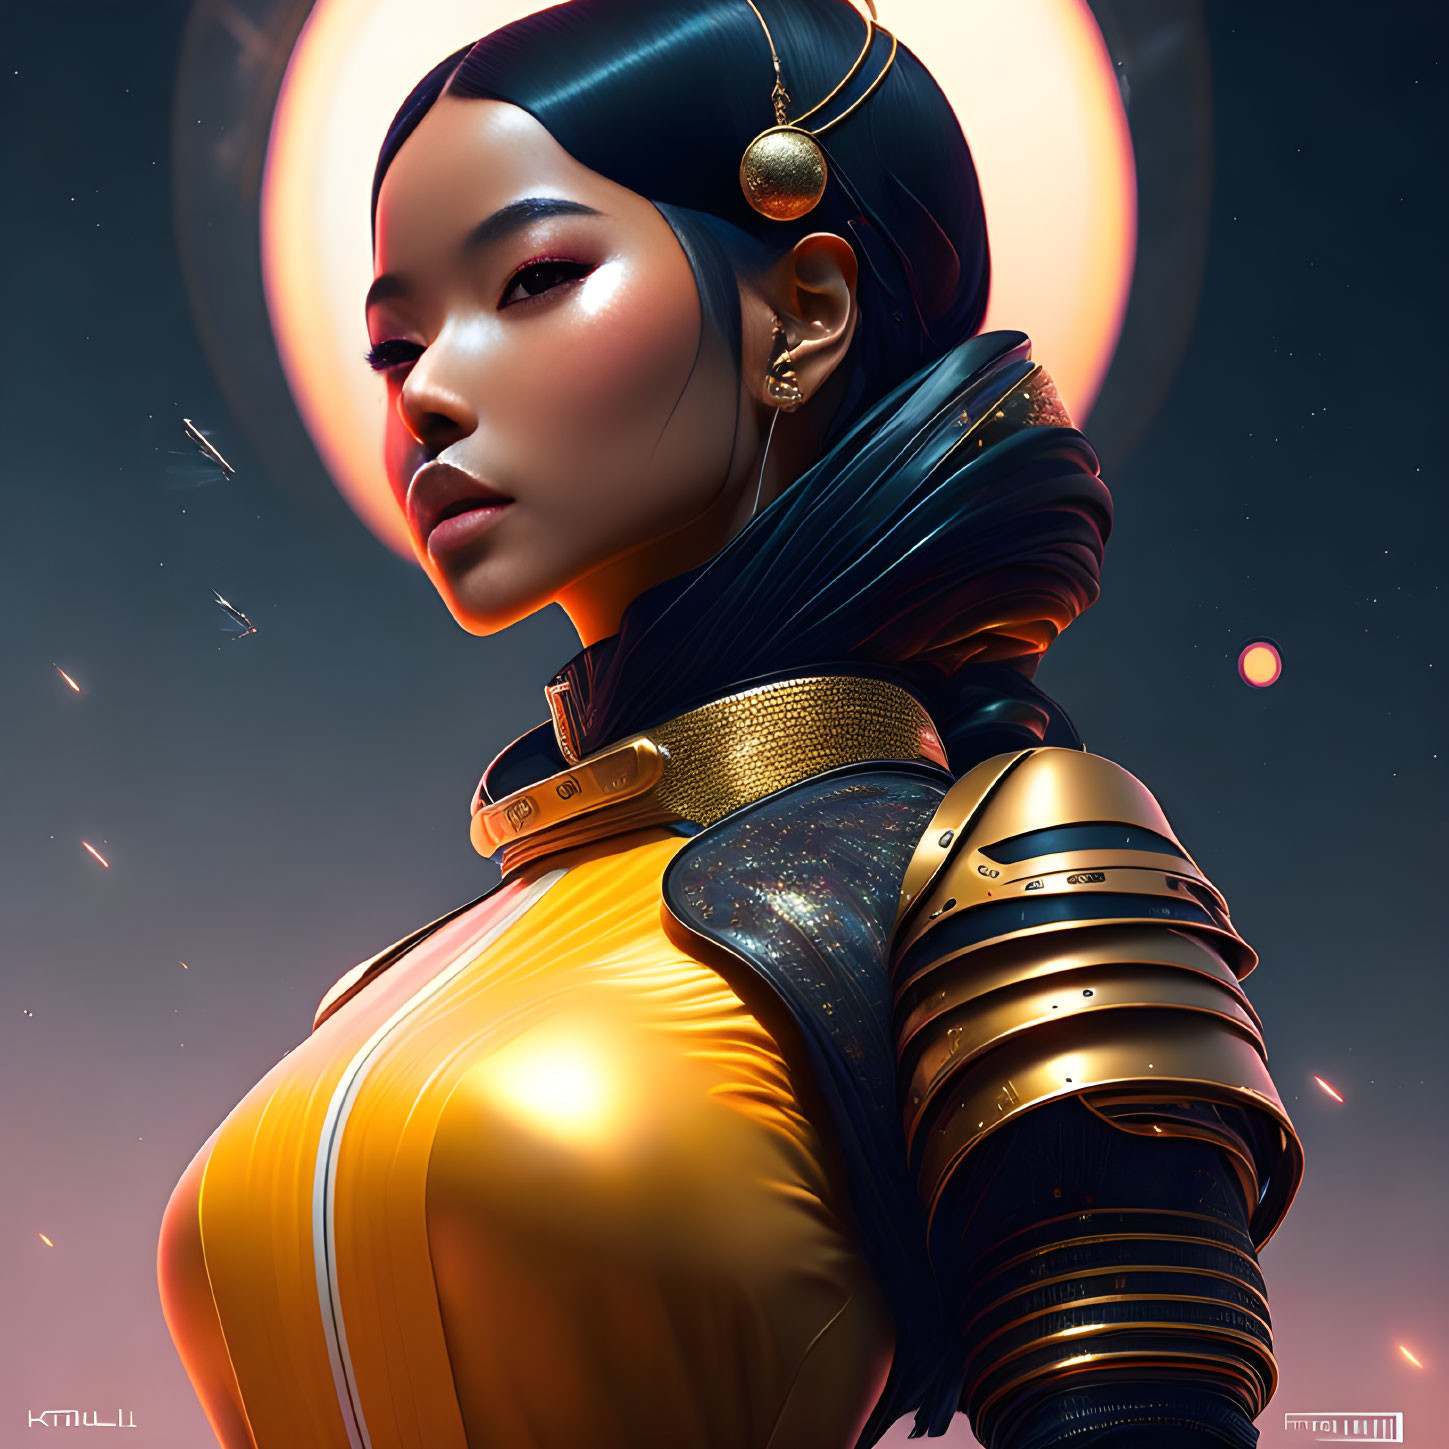 Futuristic female warrior in sleek armor against cosmic backdrop